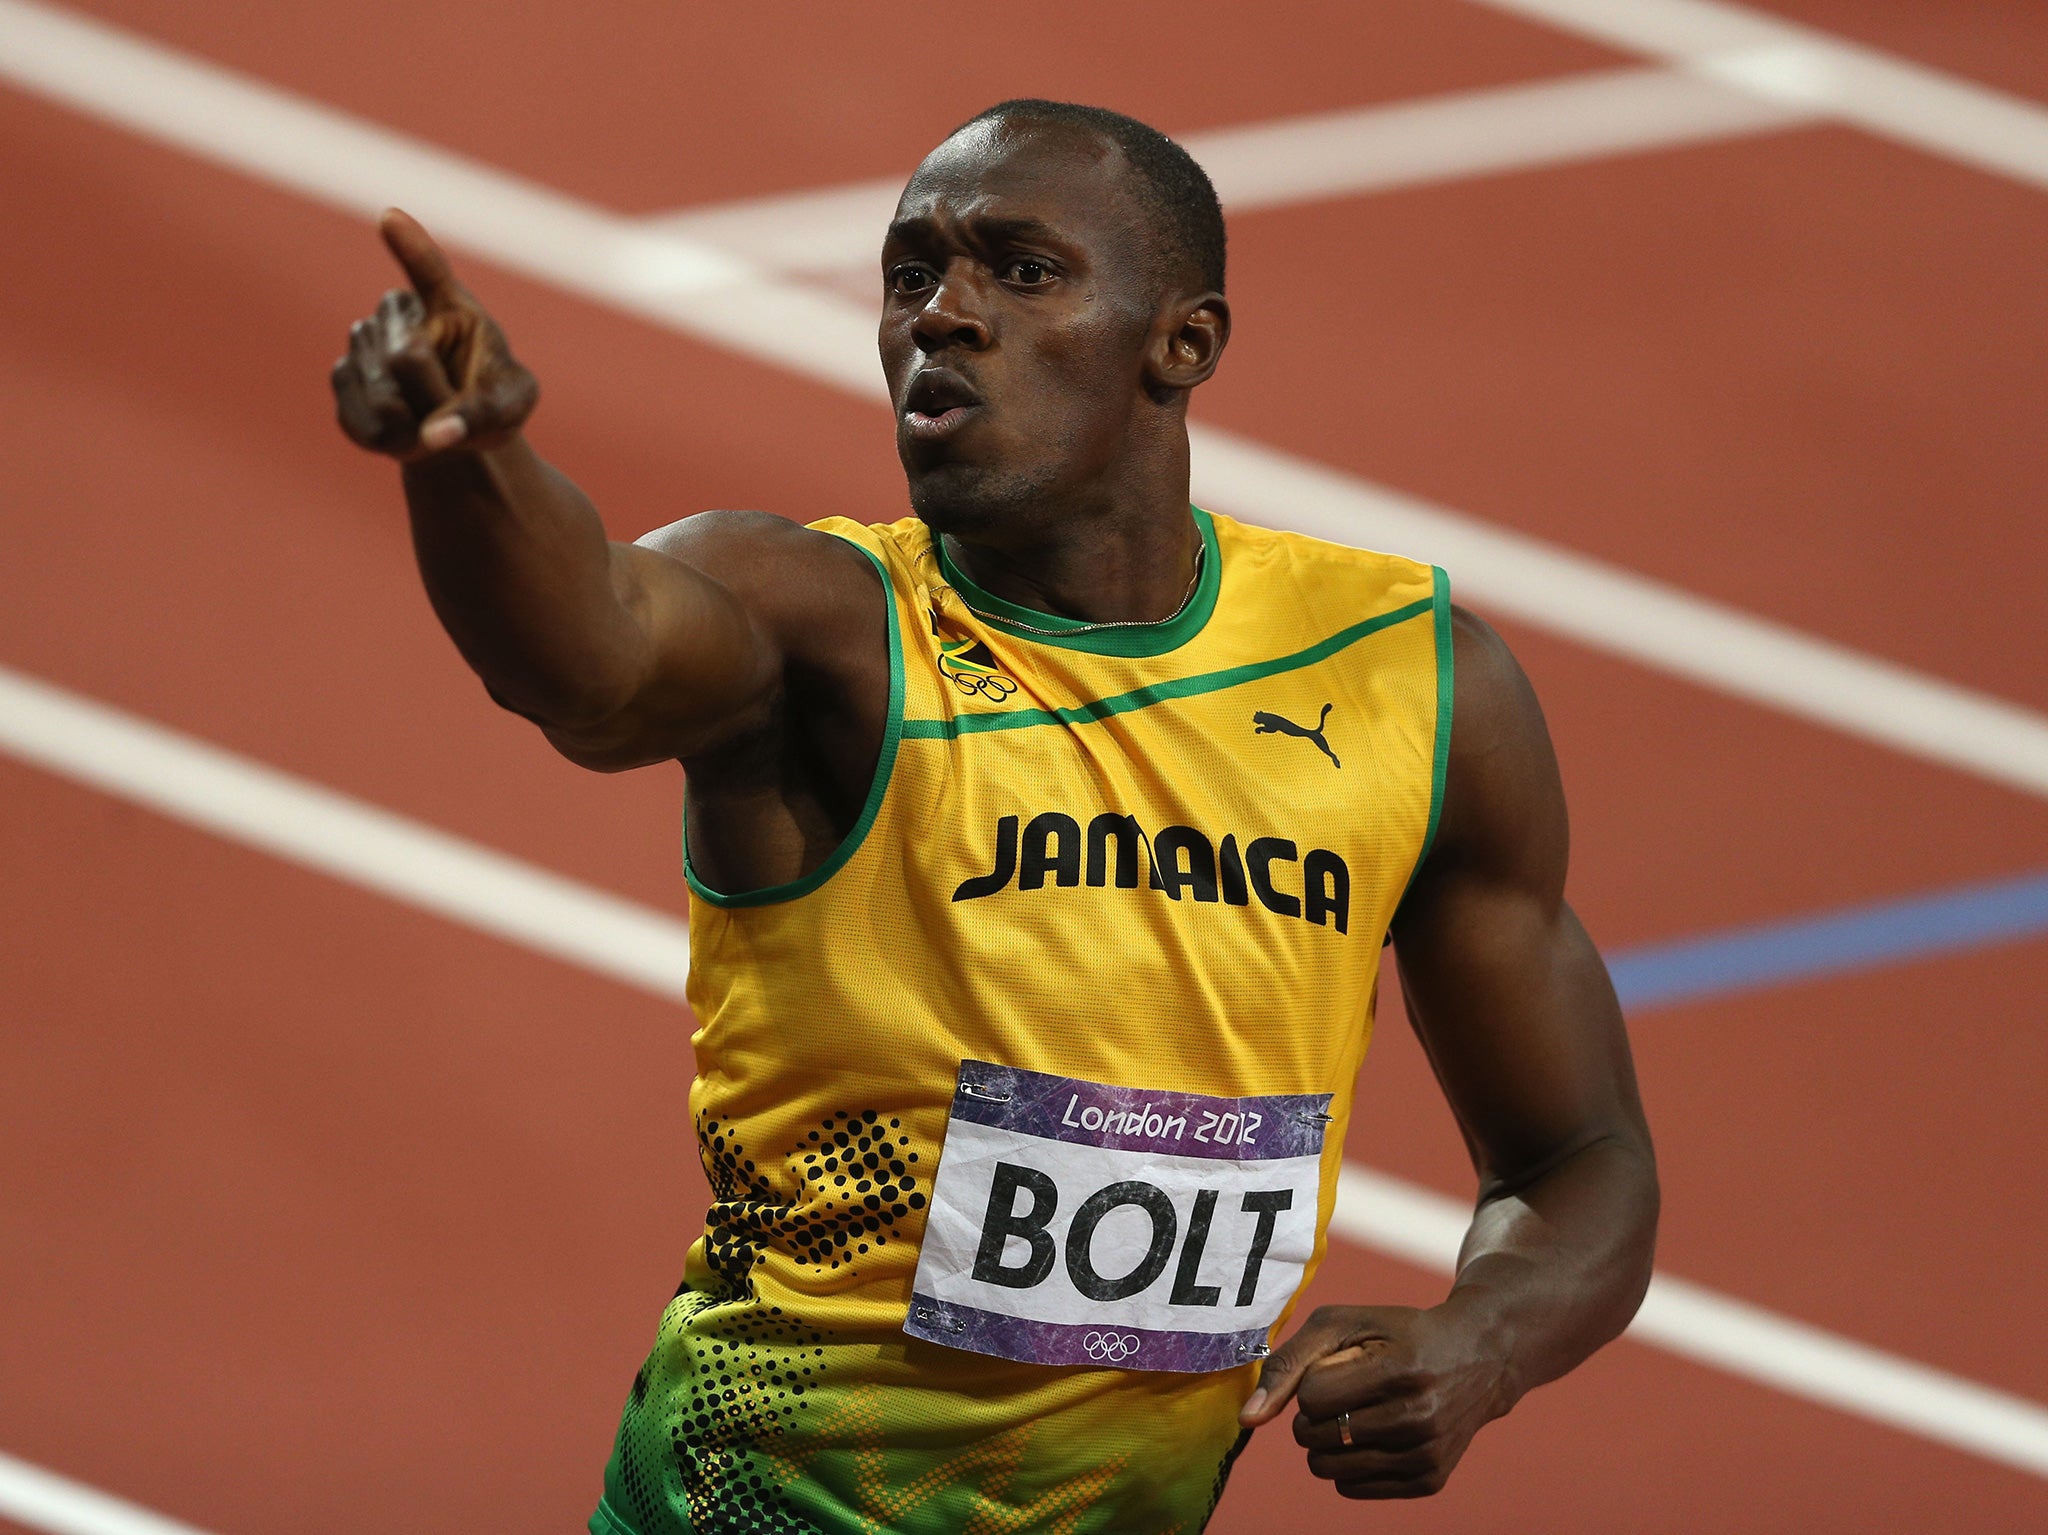 Bolt celebrates winning the 200m gold at London 2012